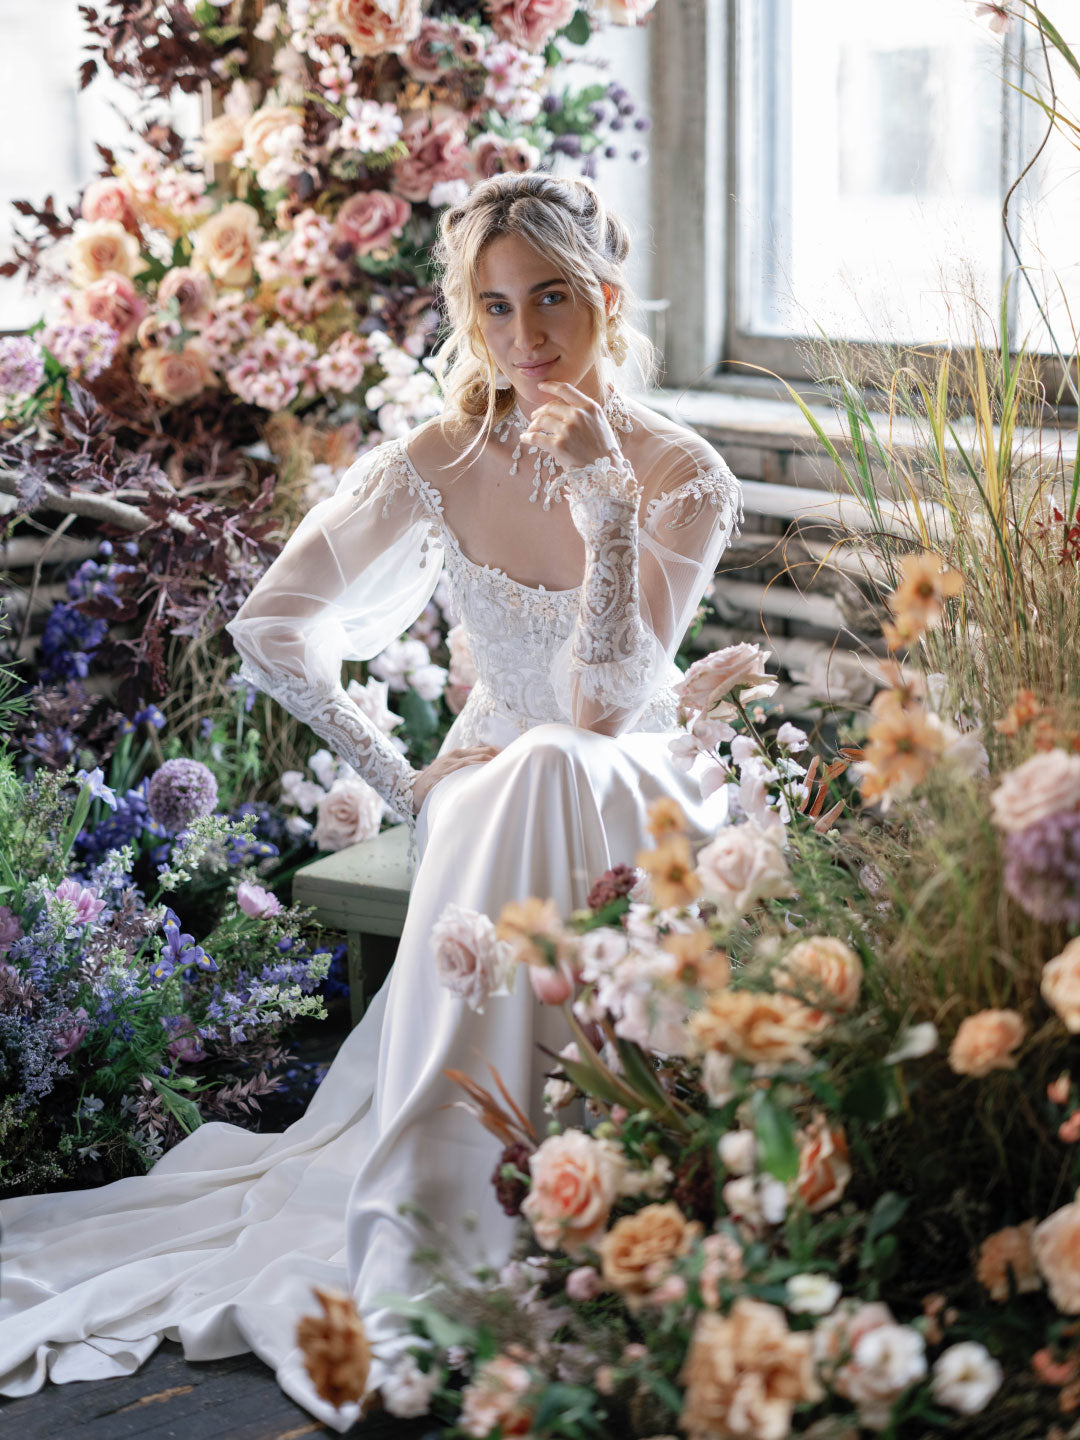 Riviere wedding dress by Claire Pettibone